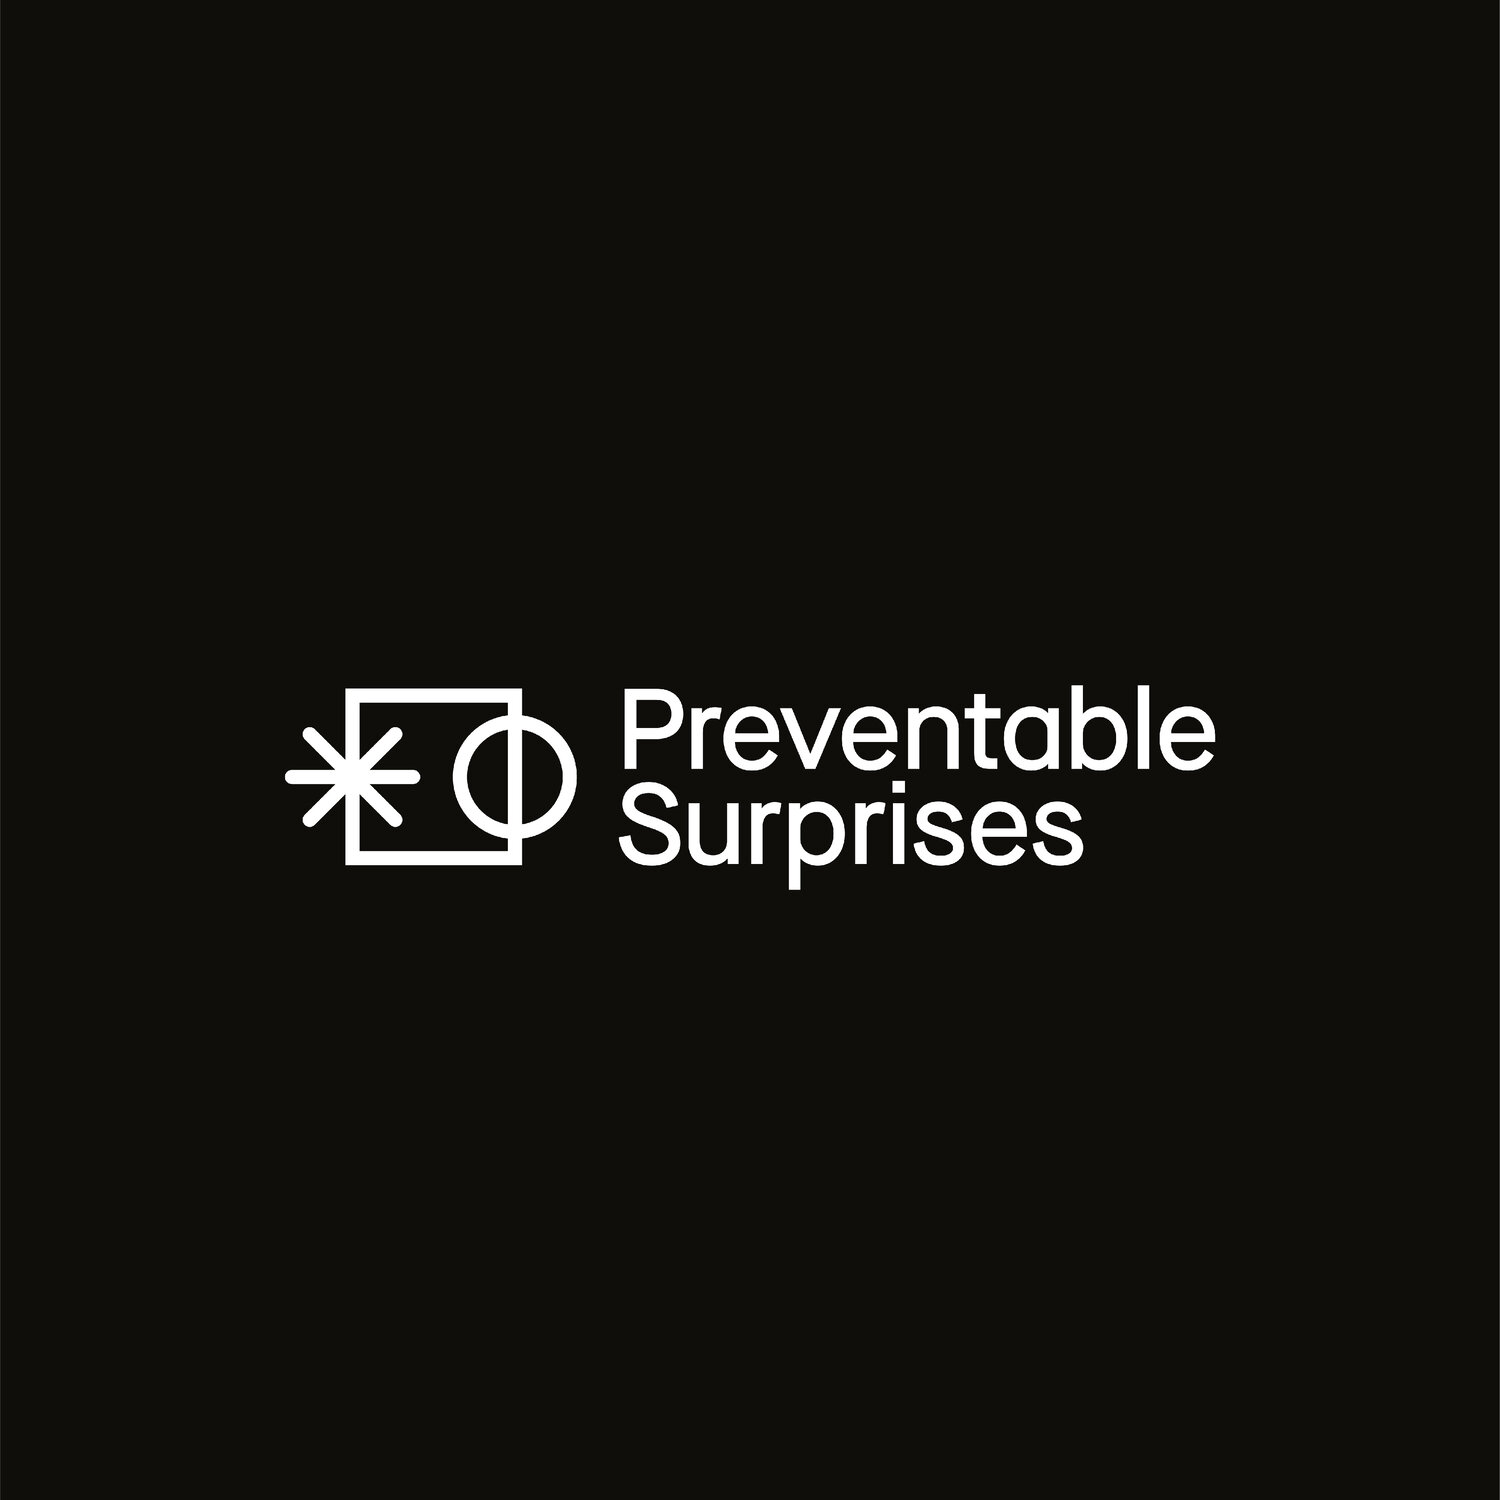 preventable surprises' logo (black background)